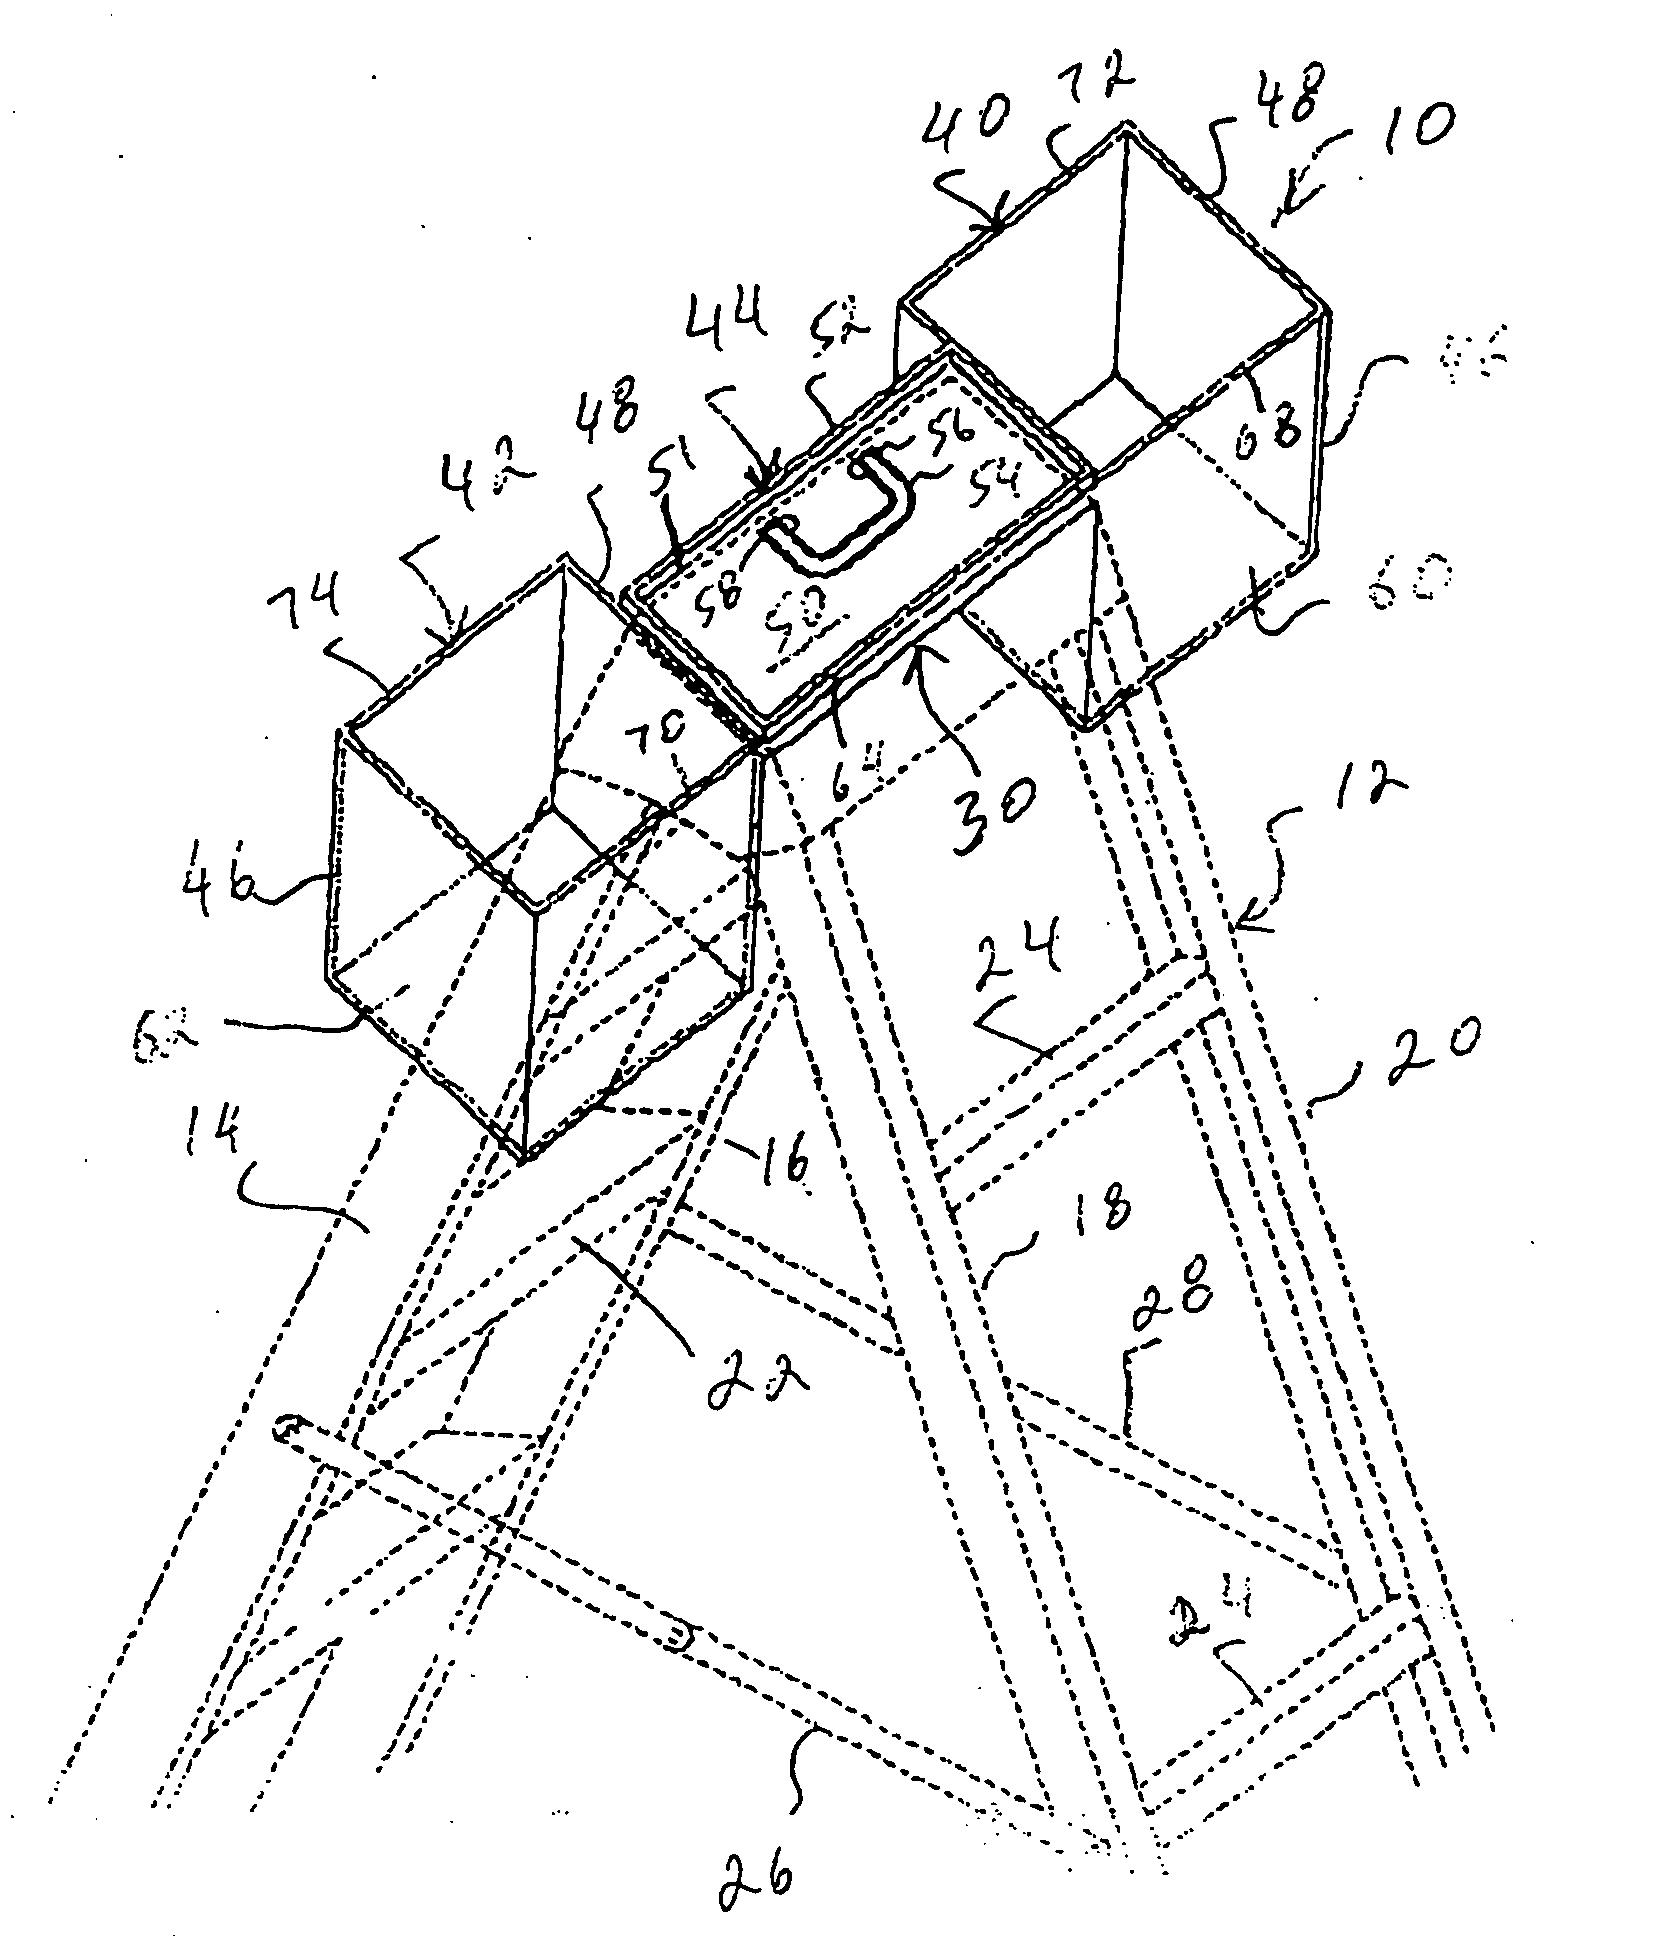 Ladder-mountable toolbox